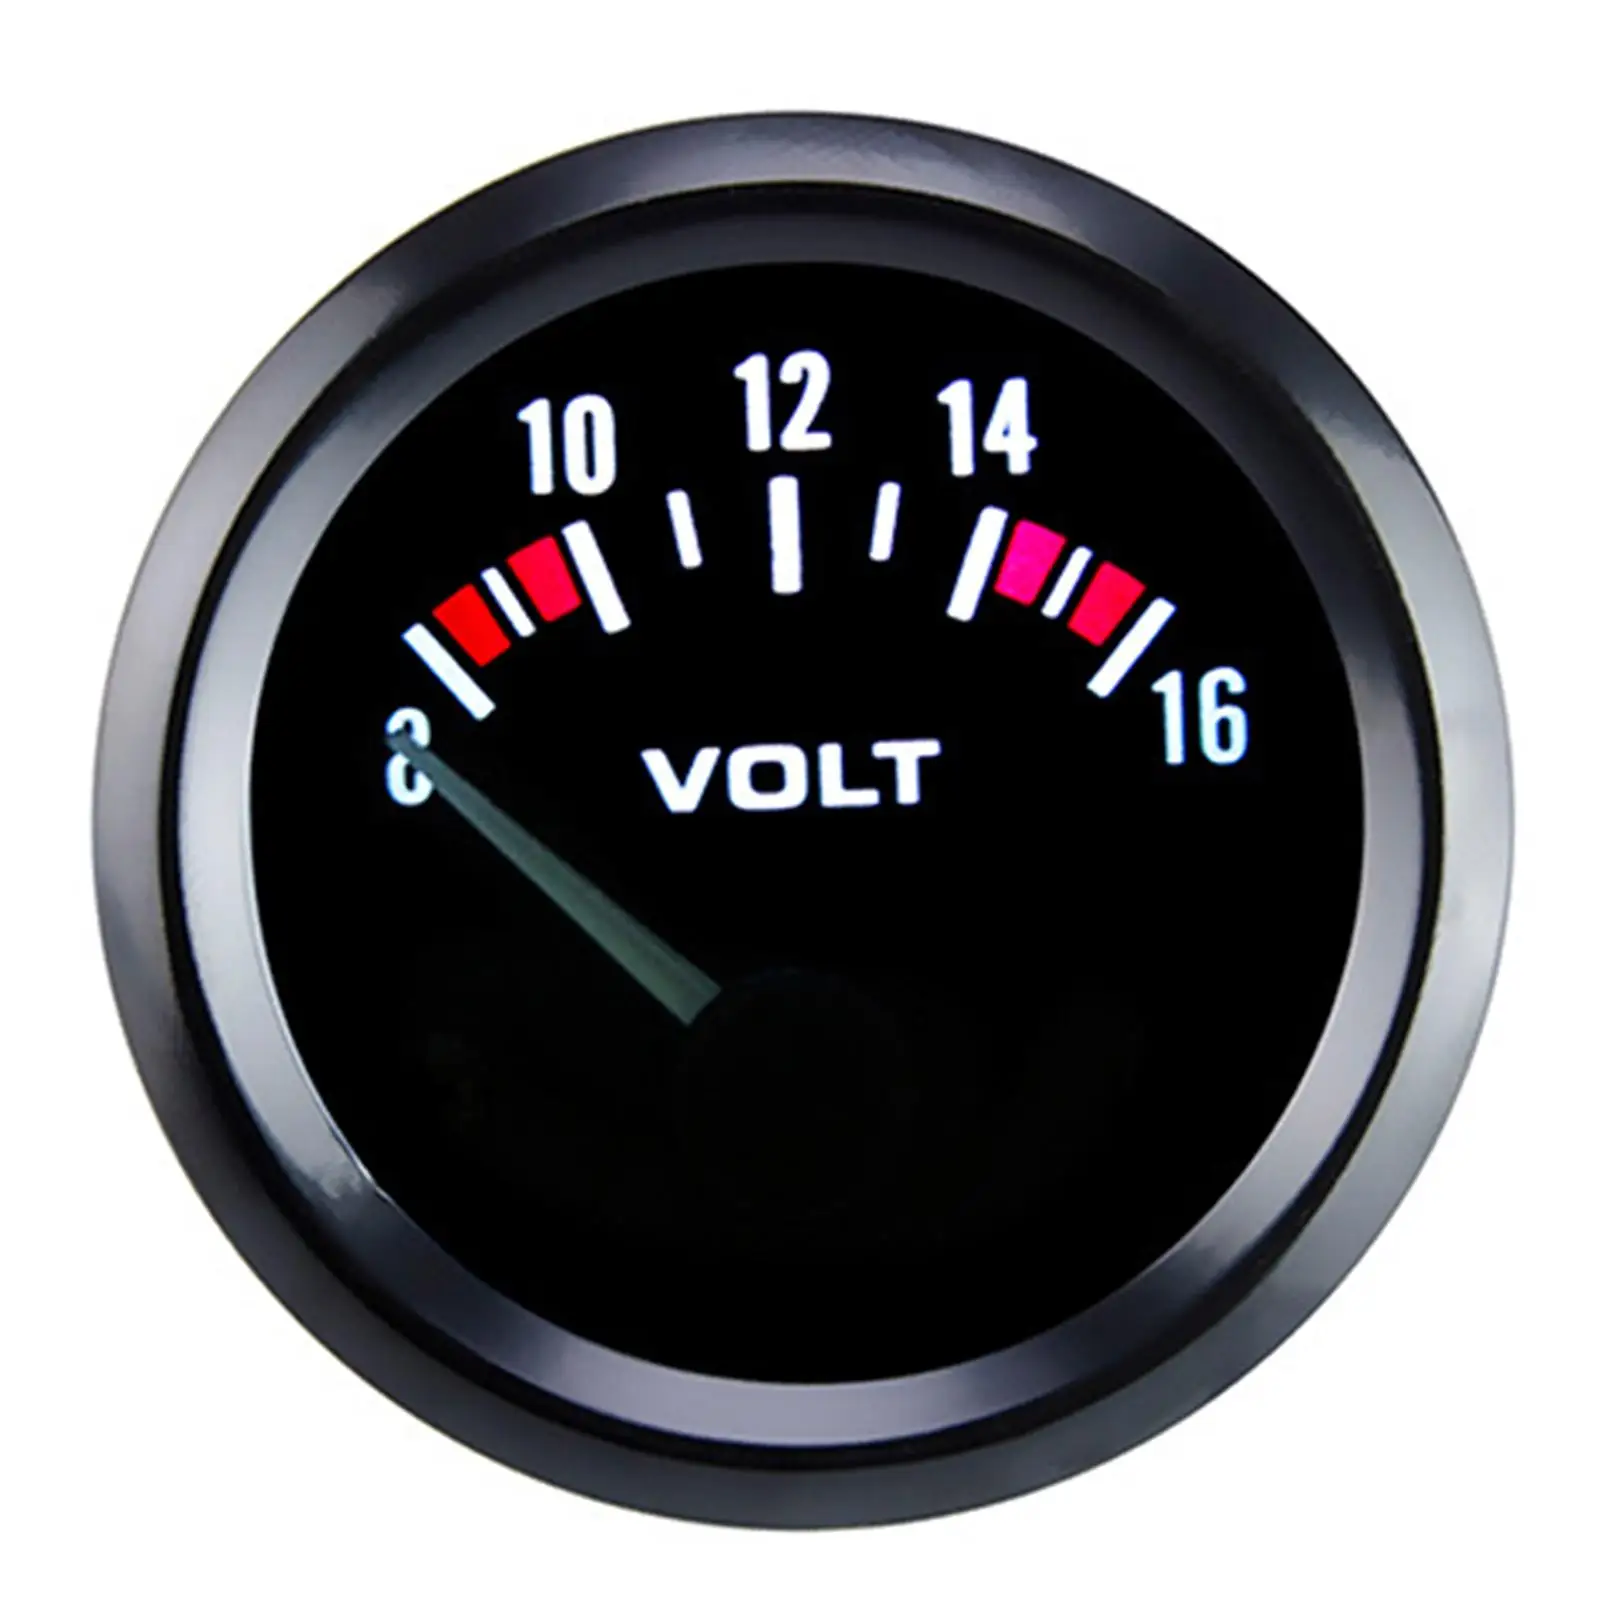 Car Voltmeter High Performance Measure Range 8-16 V Auto Parts 52mm Voltage